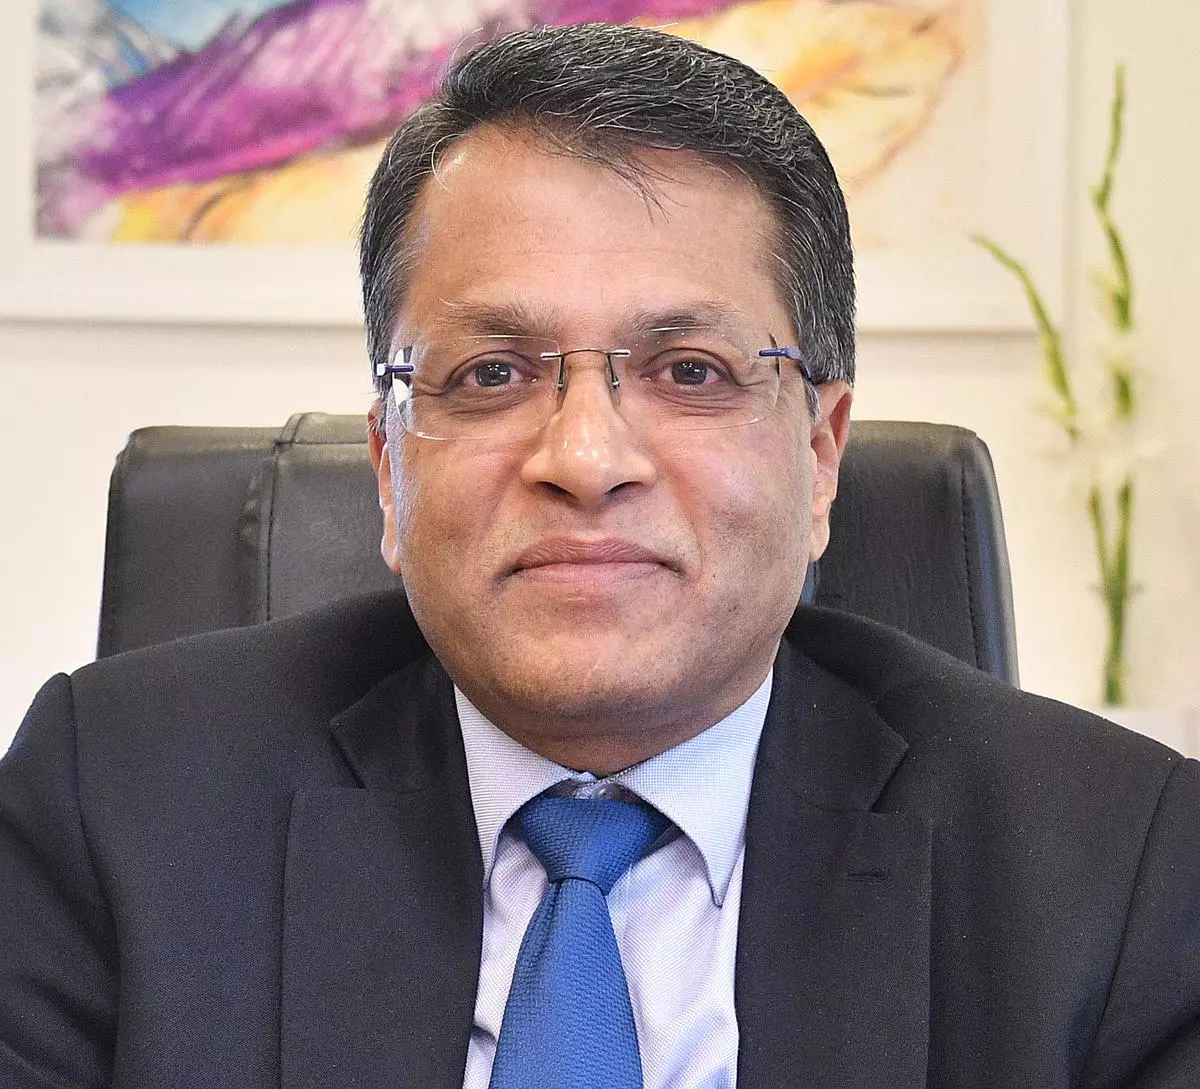  Rahul Mithal, Chairman and Managing Director, RITES Ltd